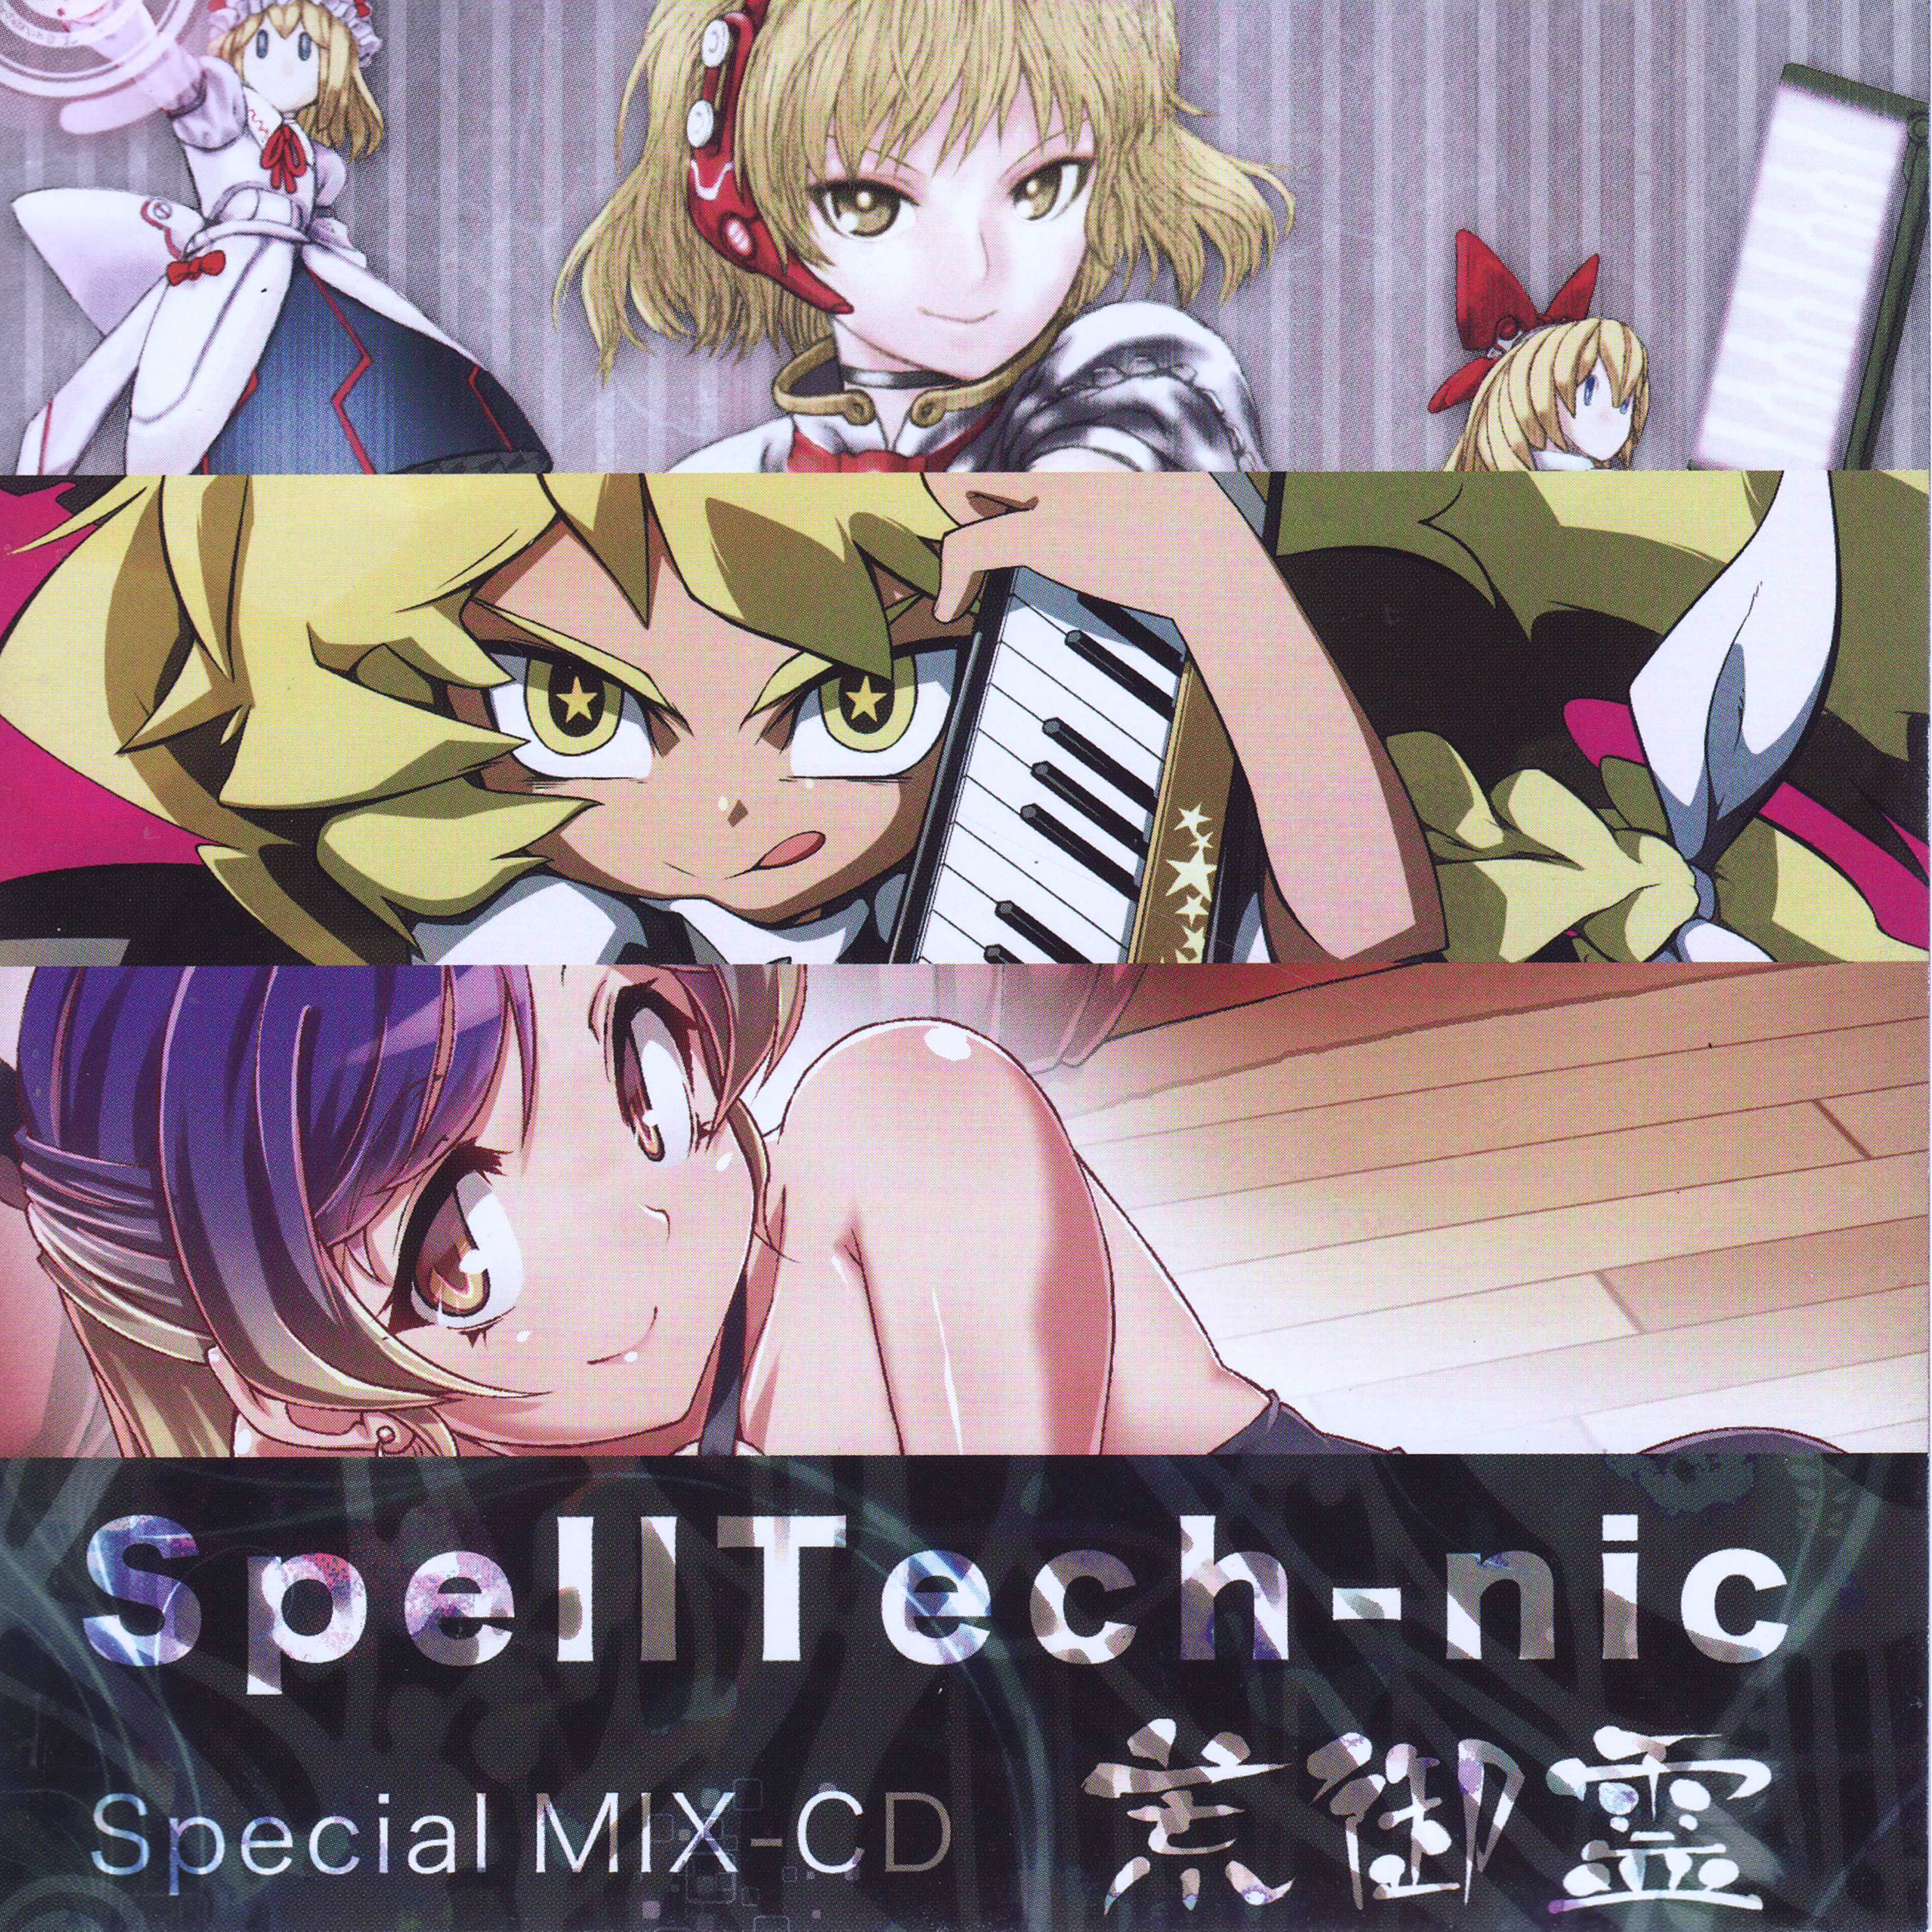 SpellTech-nic Special MIX-CD